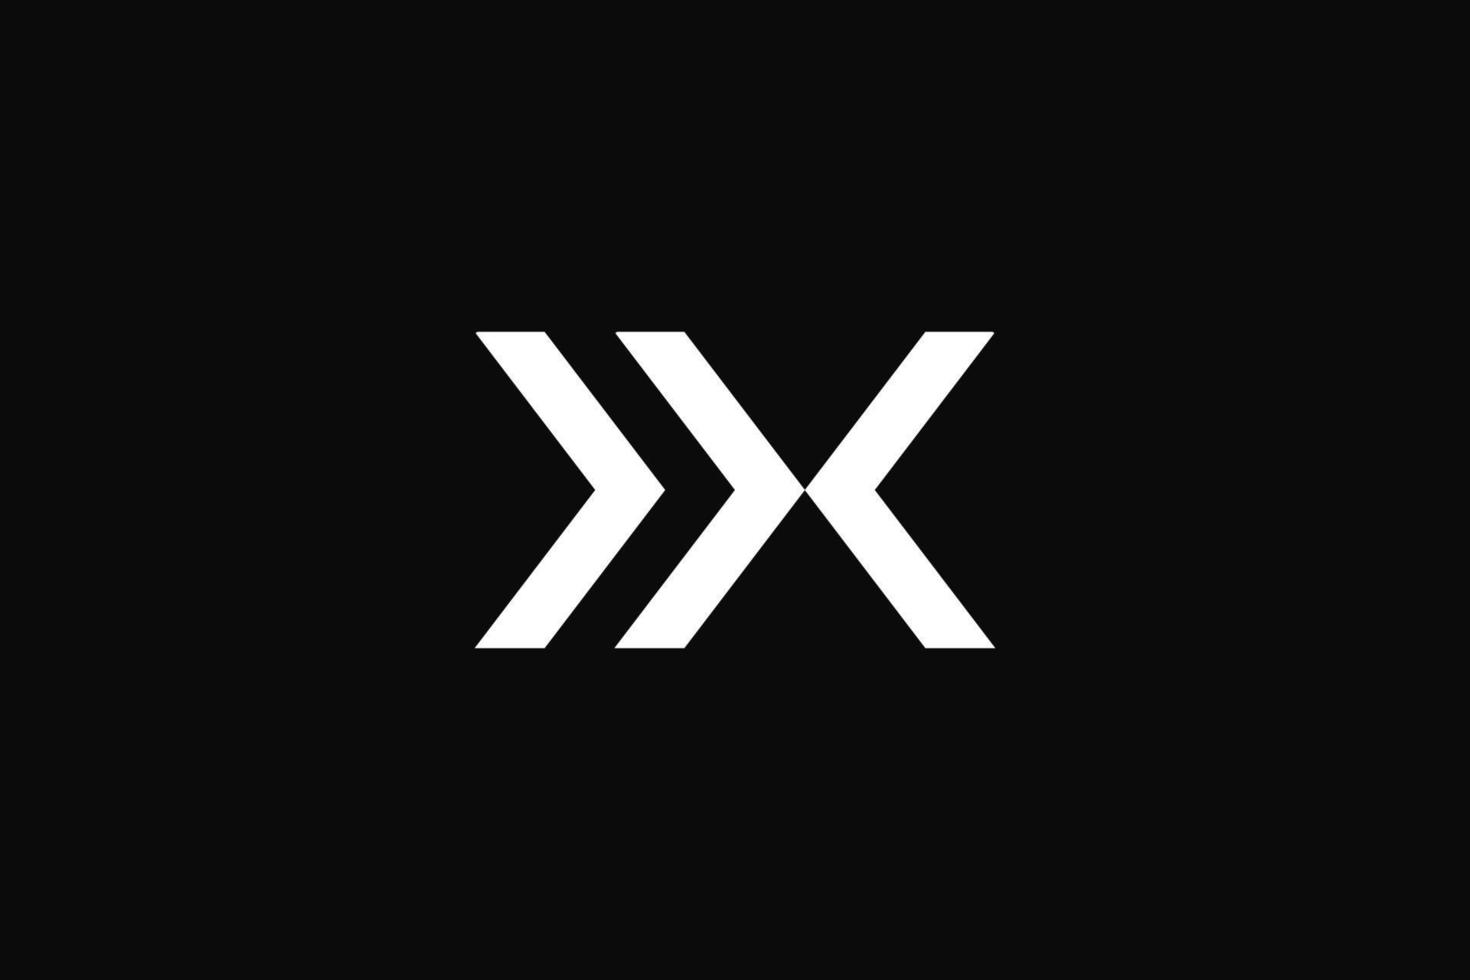 DX monogram logotype design vector